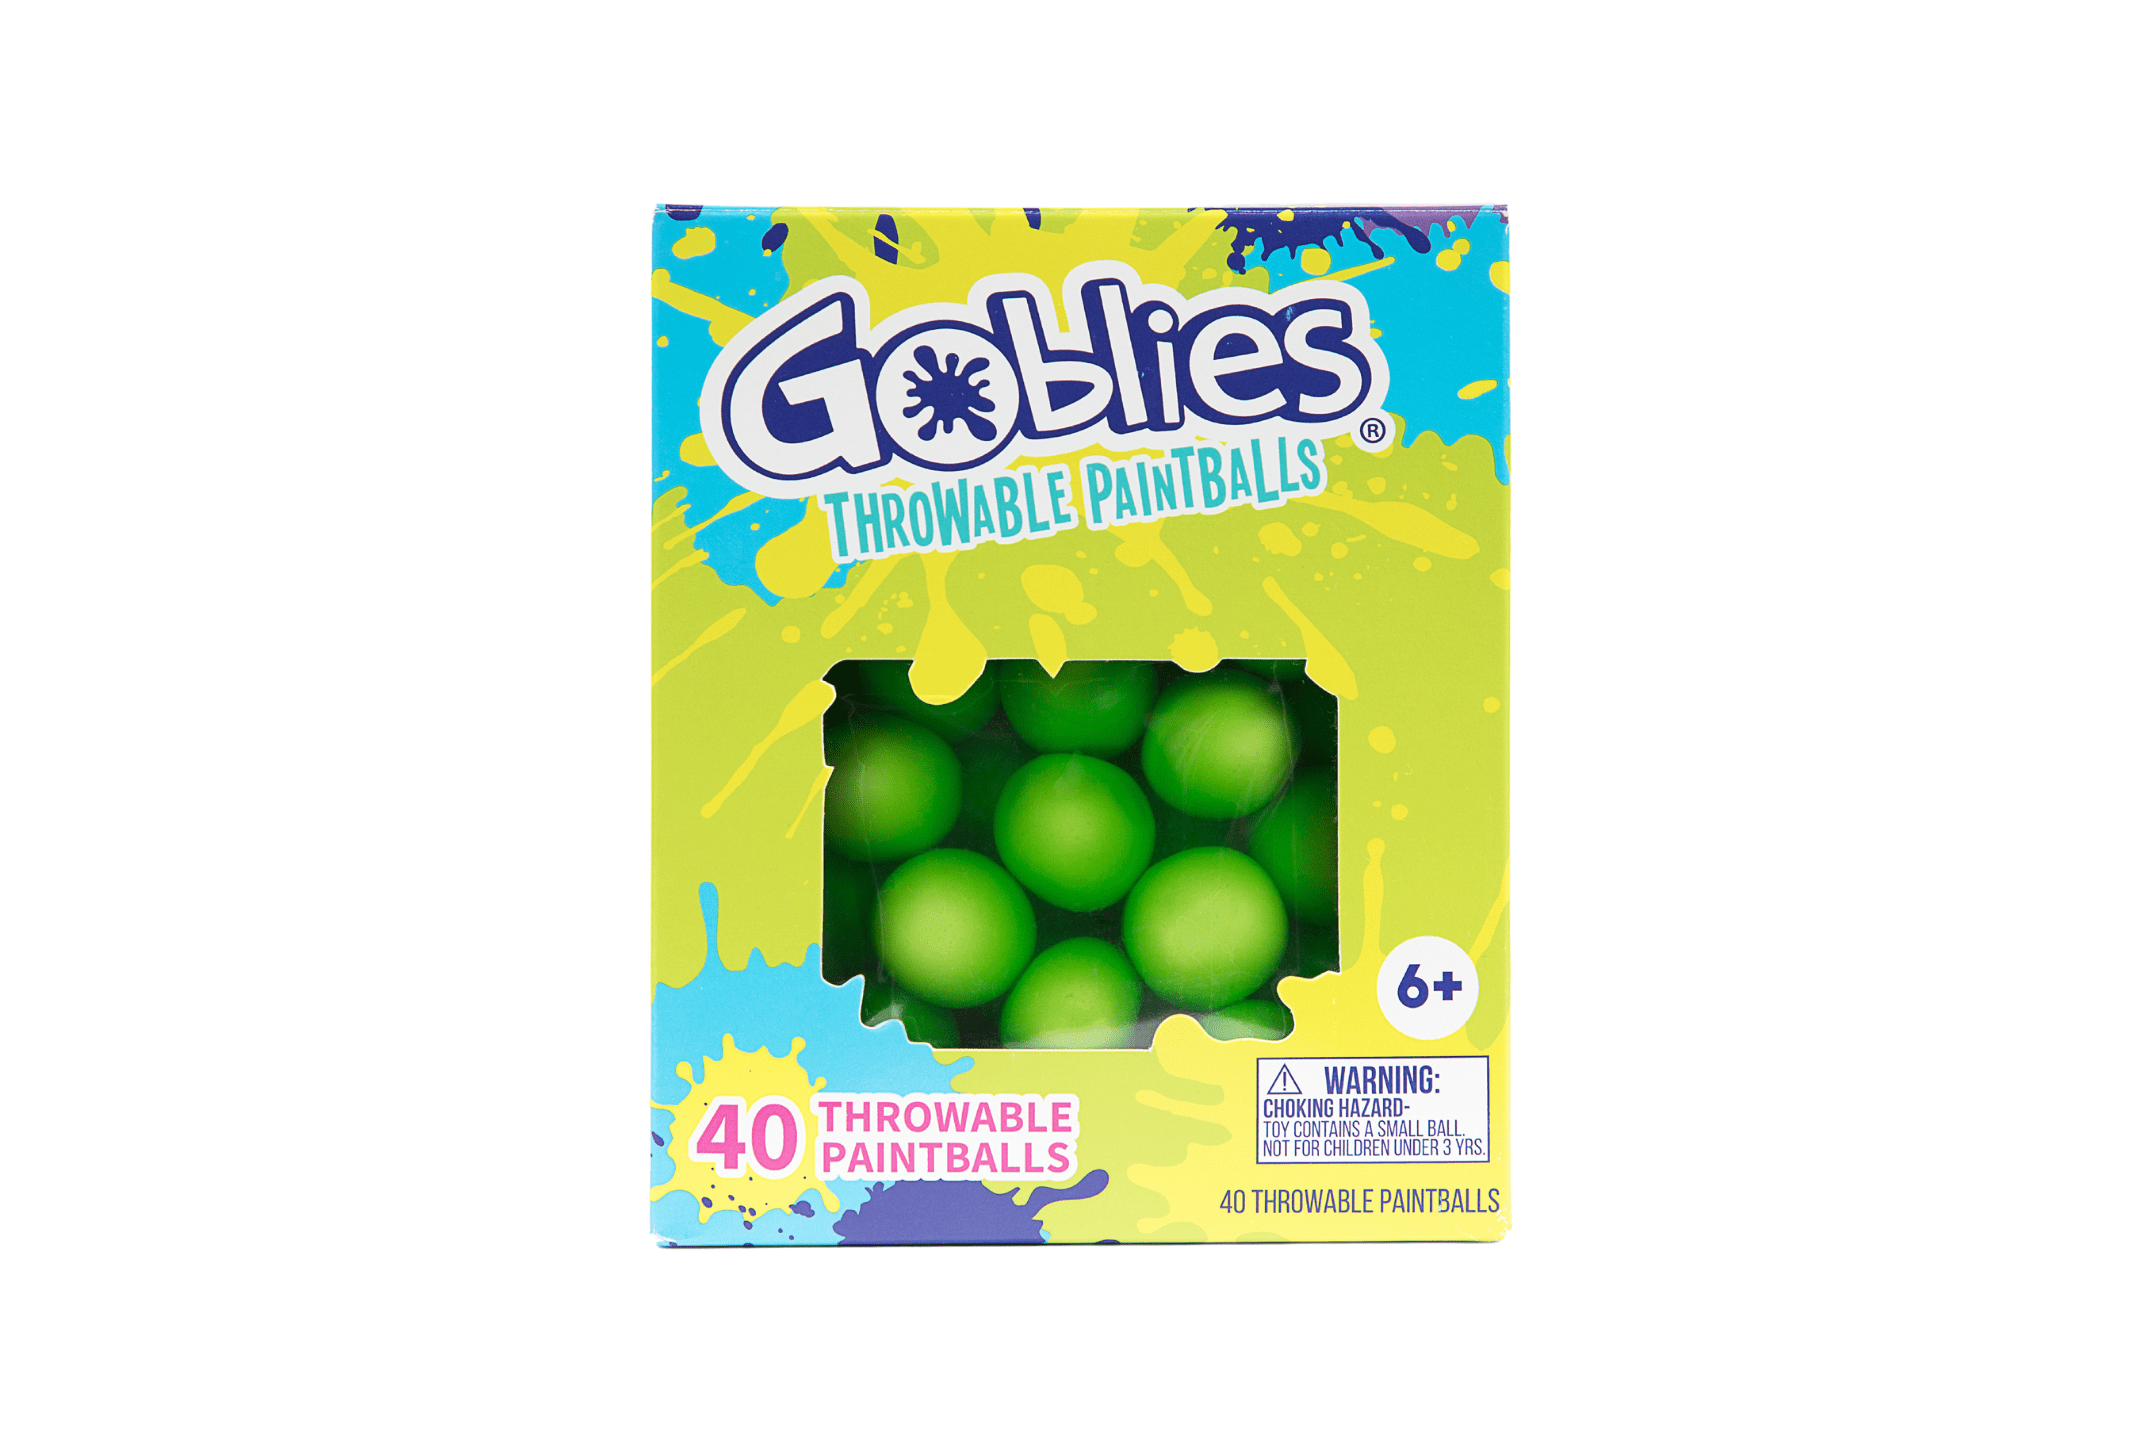 Goblies - Throwable Paintballs